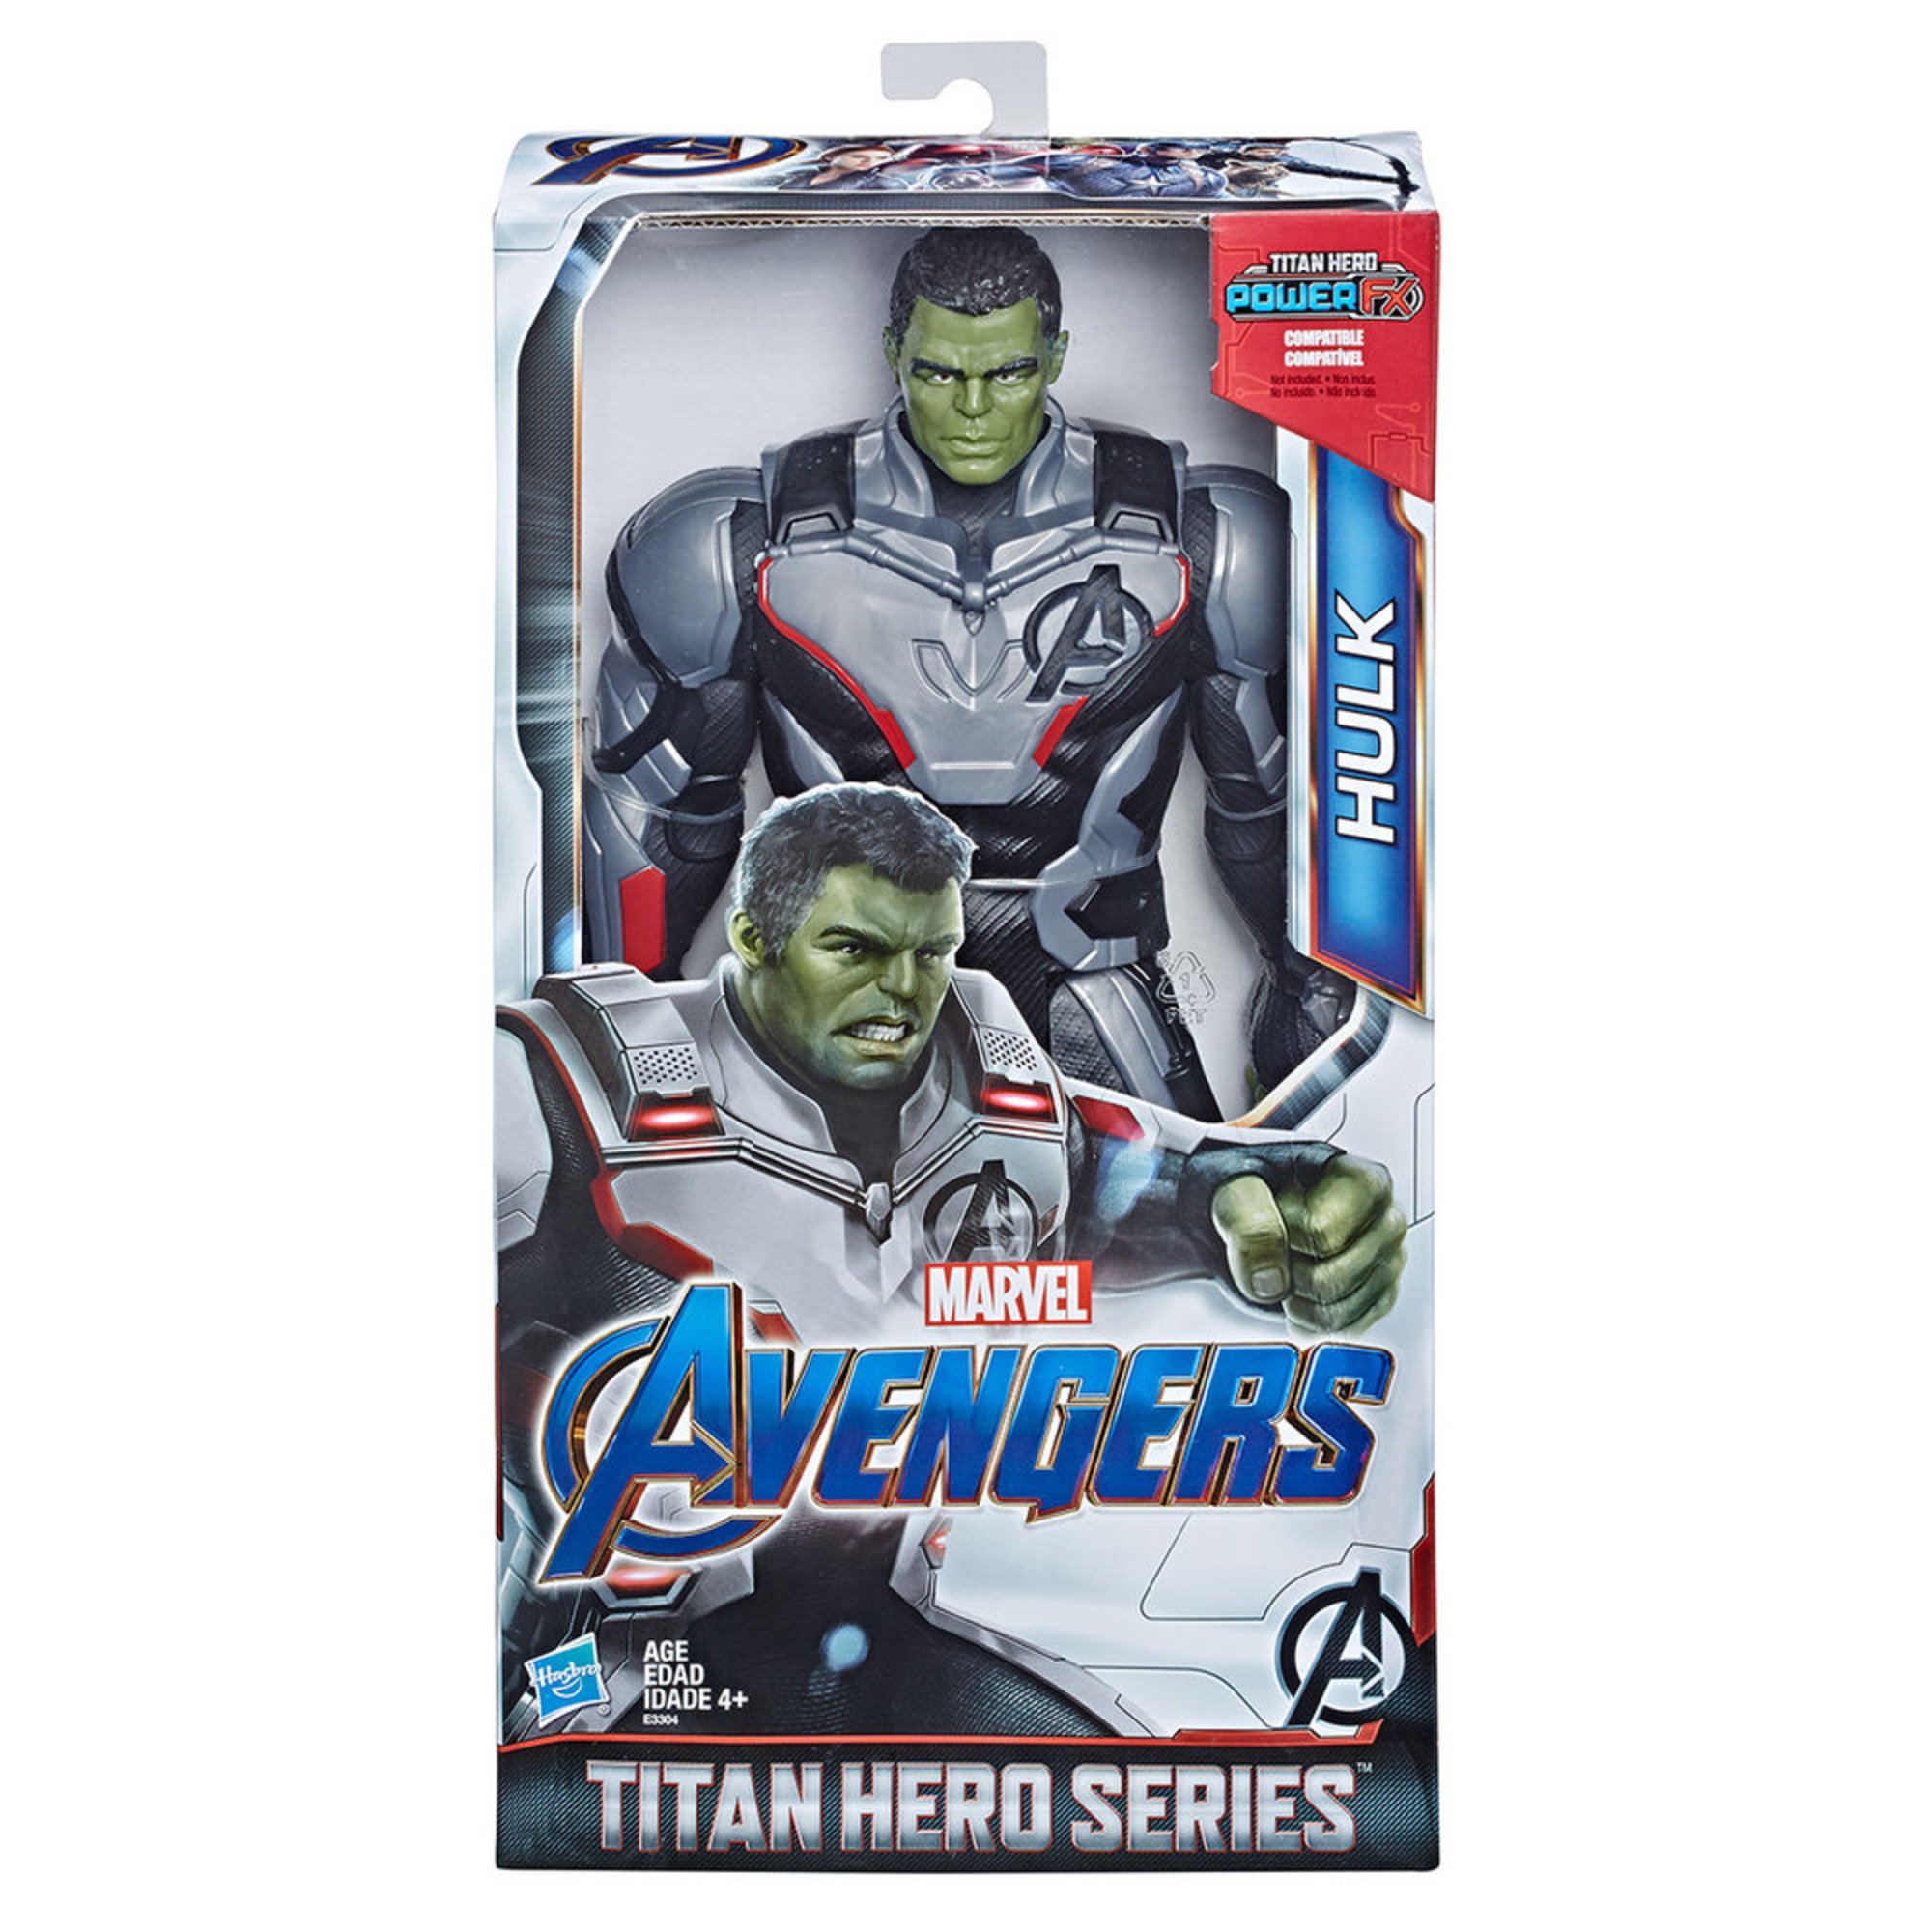 connect titan hero power fx pack hulk